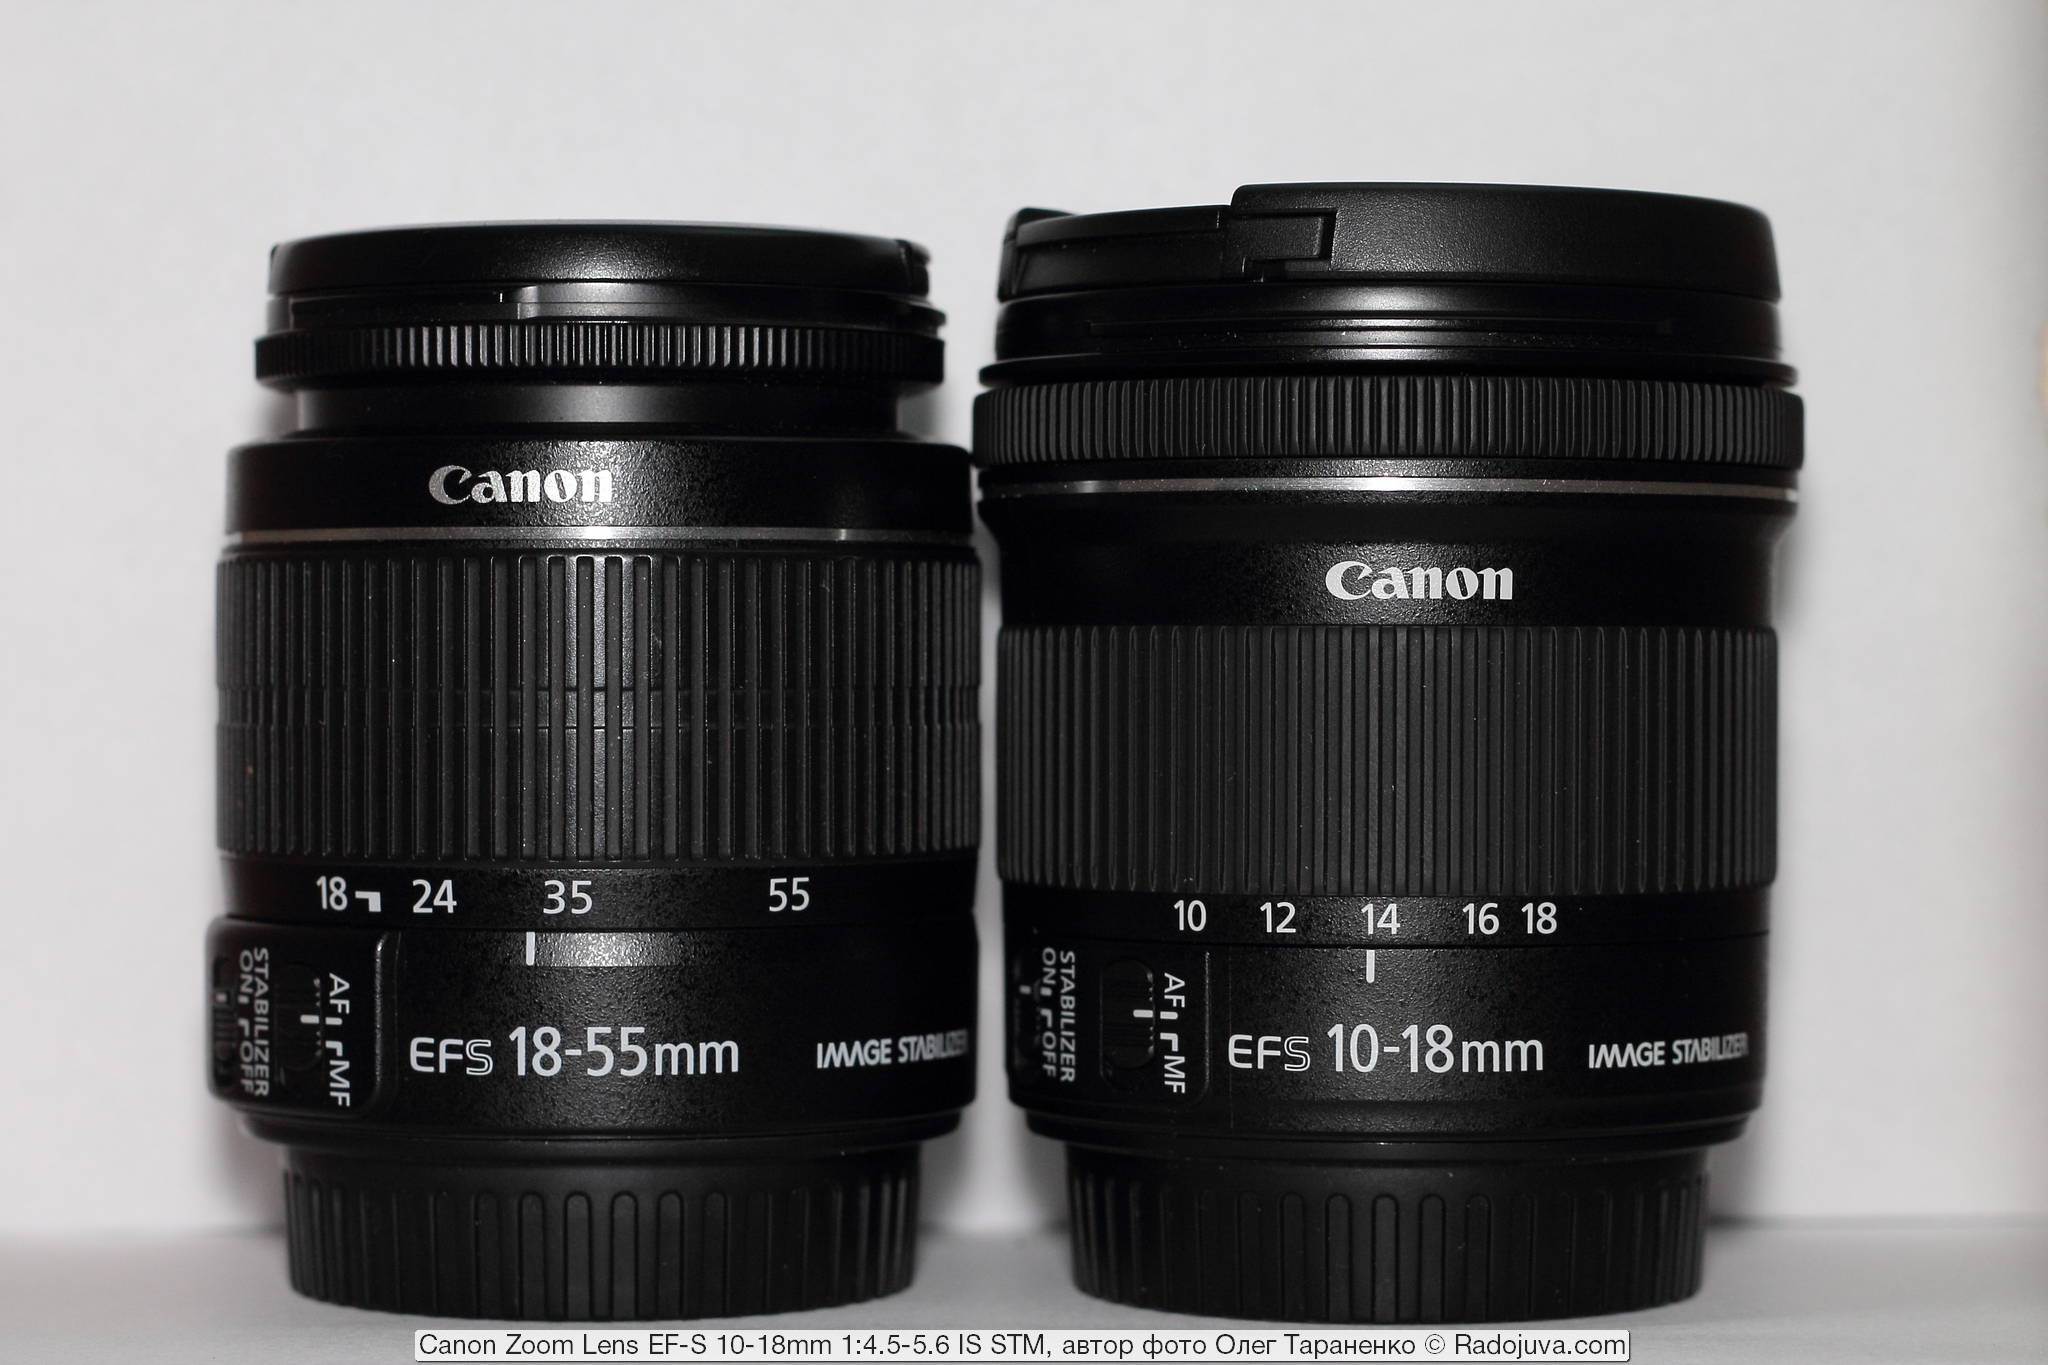 Canon Zoom Lens EF-S 10-18mm 1:4.5-5.6 IS STM